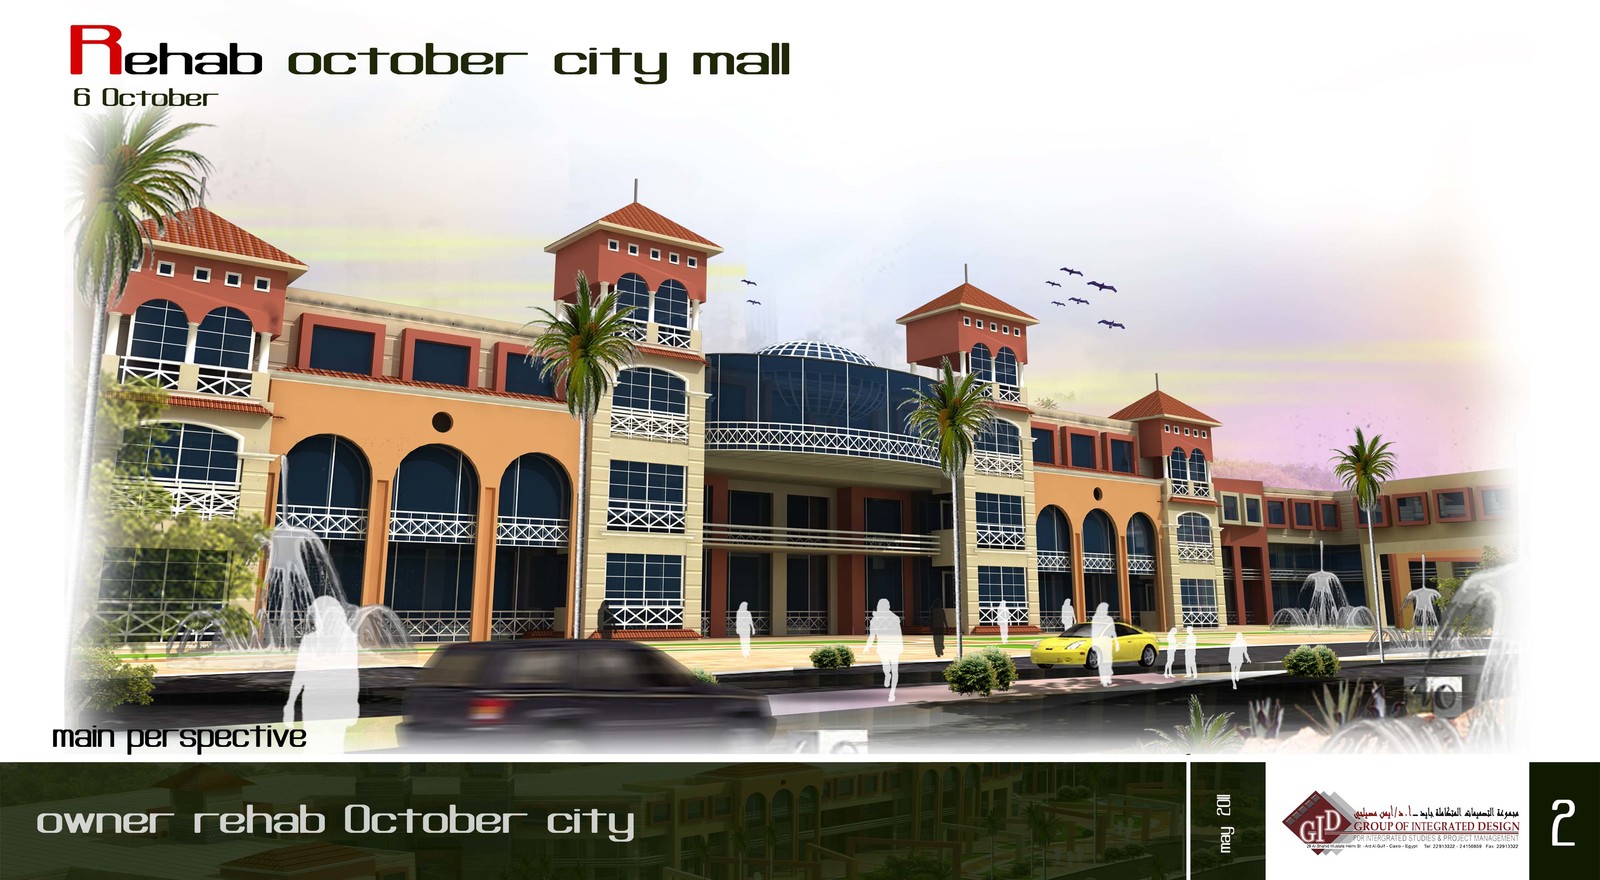 Rehab-City-Mall-2-mf.jpg